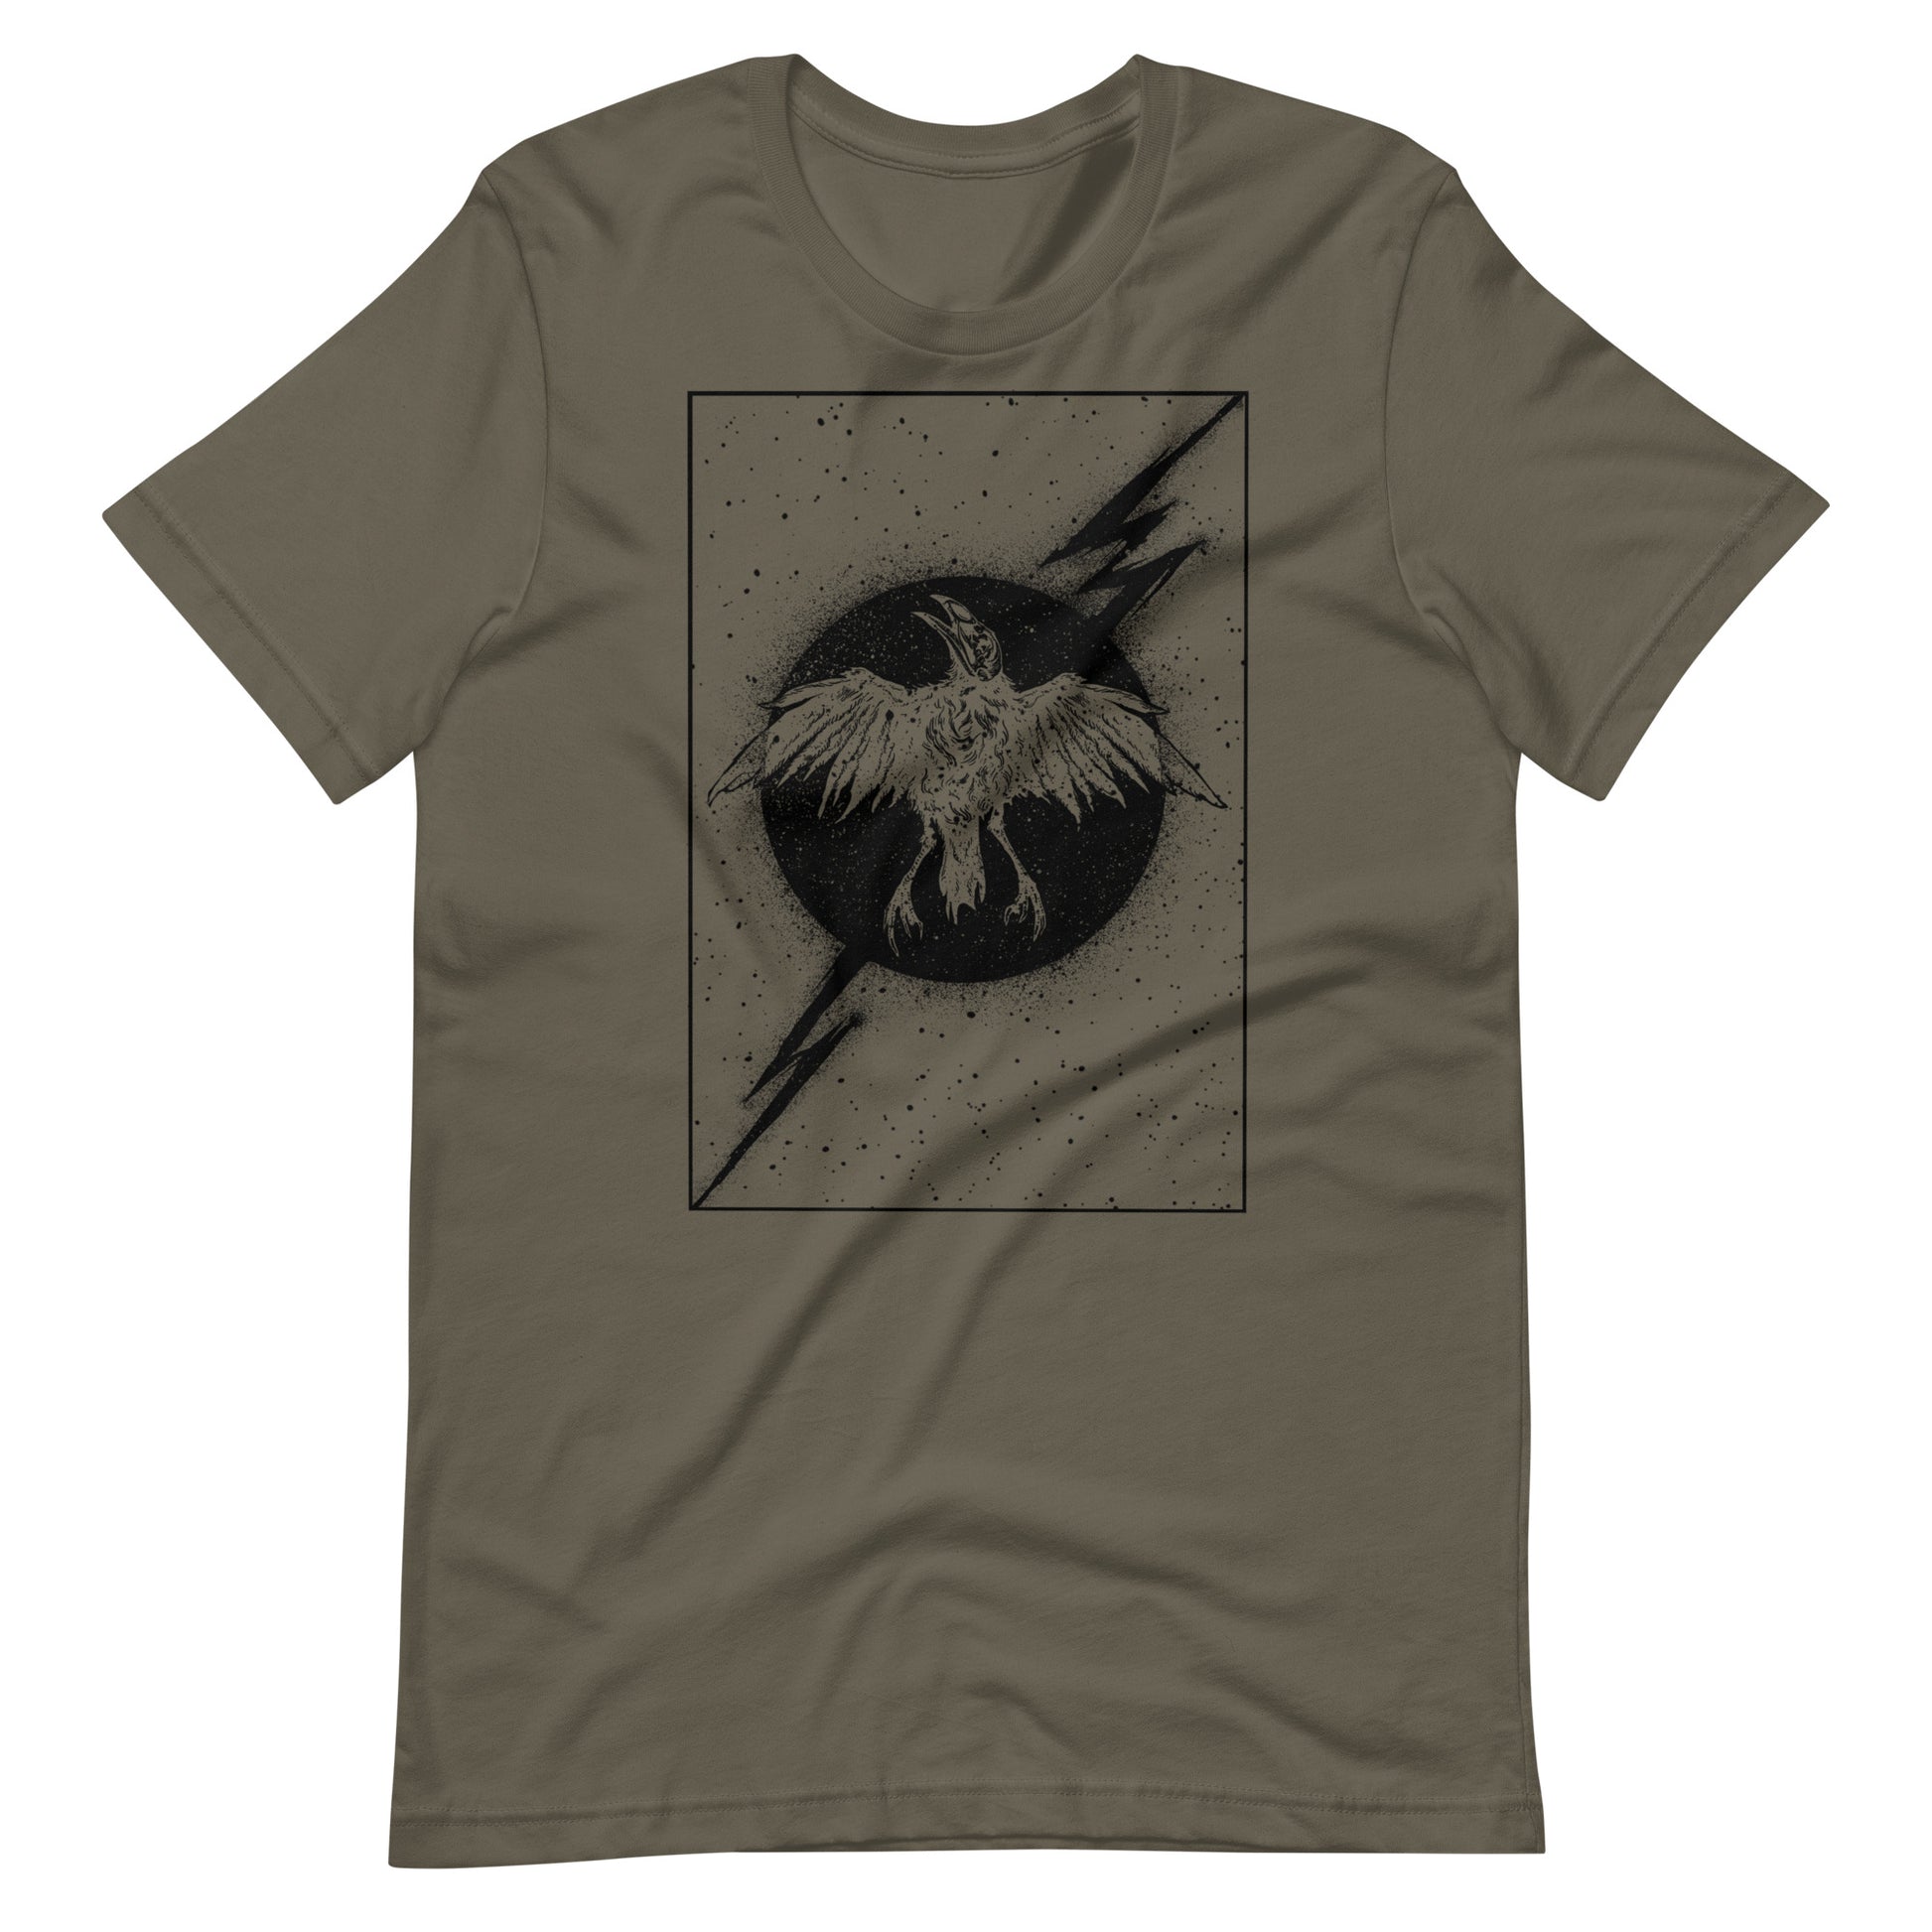 Night Thunder Black - Men's t-shirt - Army Front